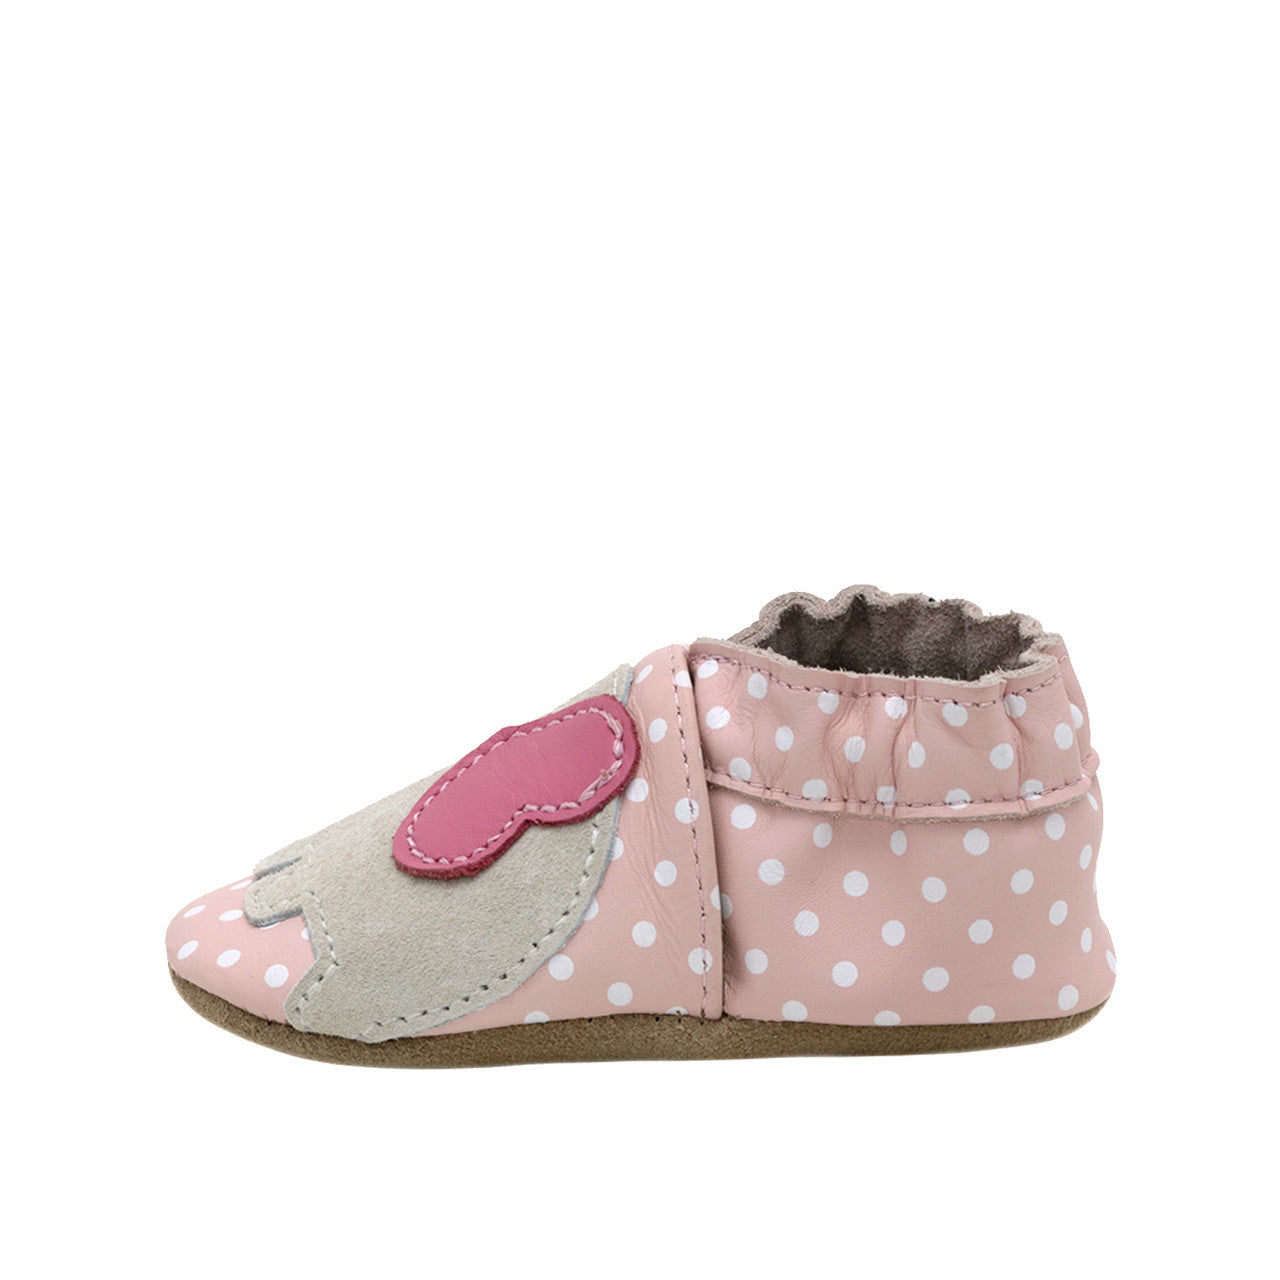 Little Peanut Pastel Pink Baby Shoes